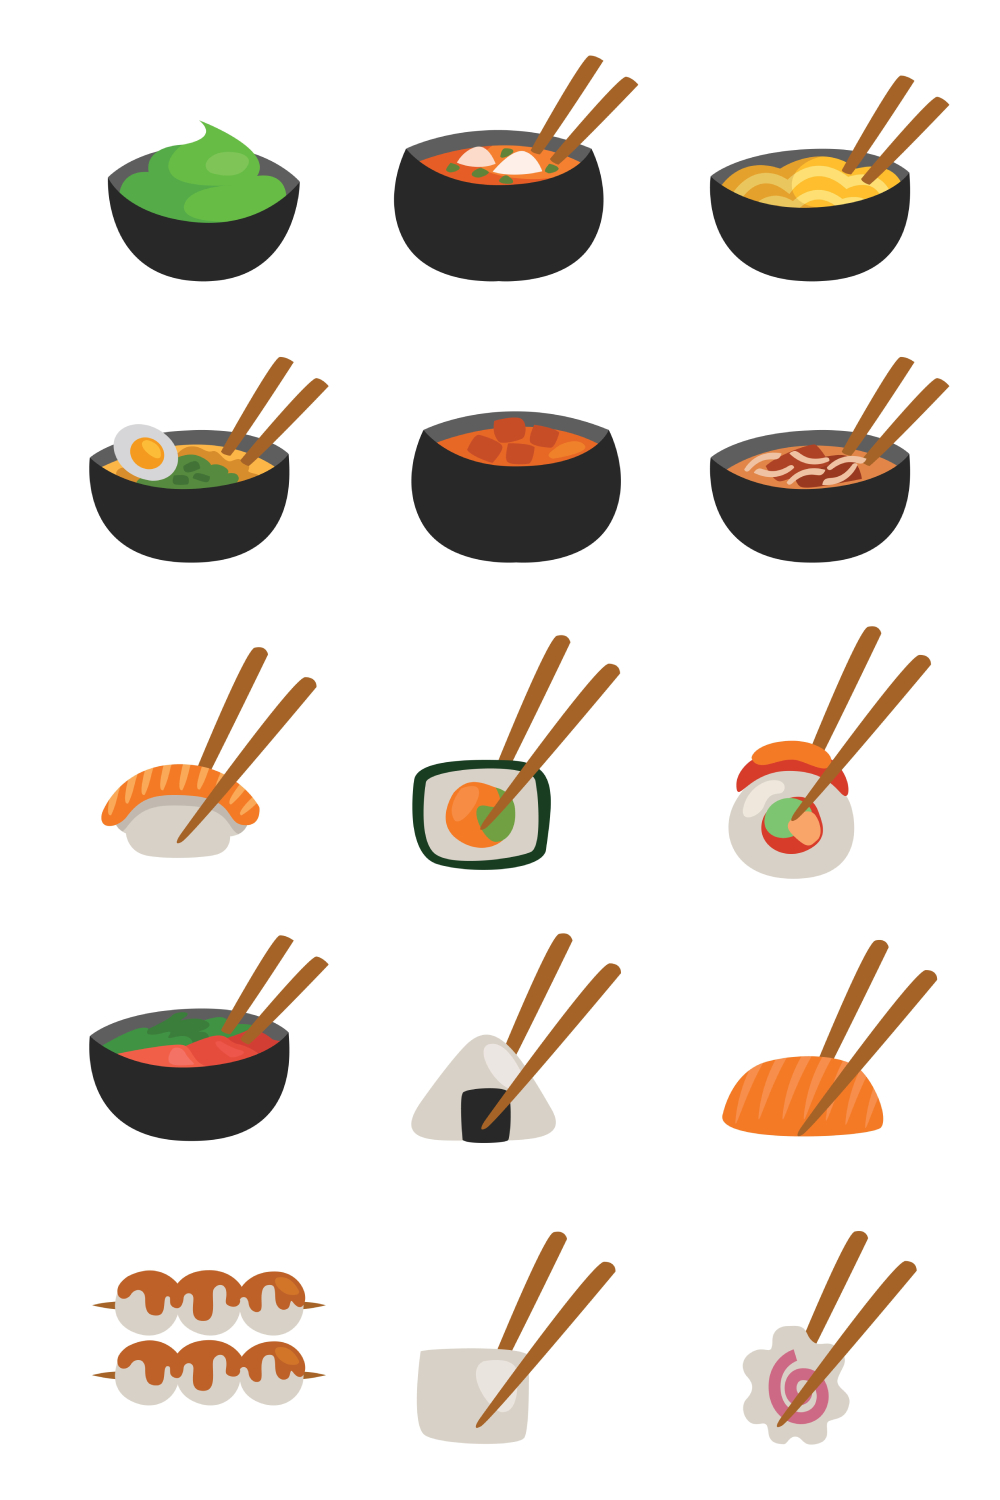 Asian Food Art Set Pinterest Cover.